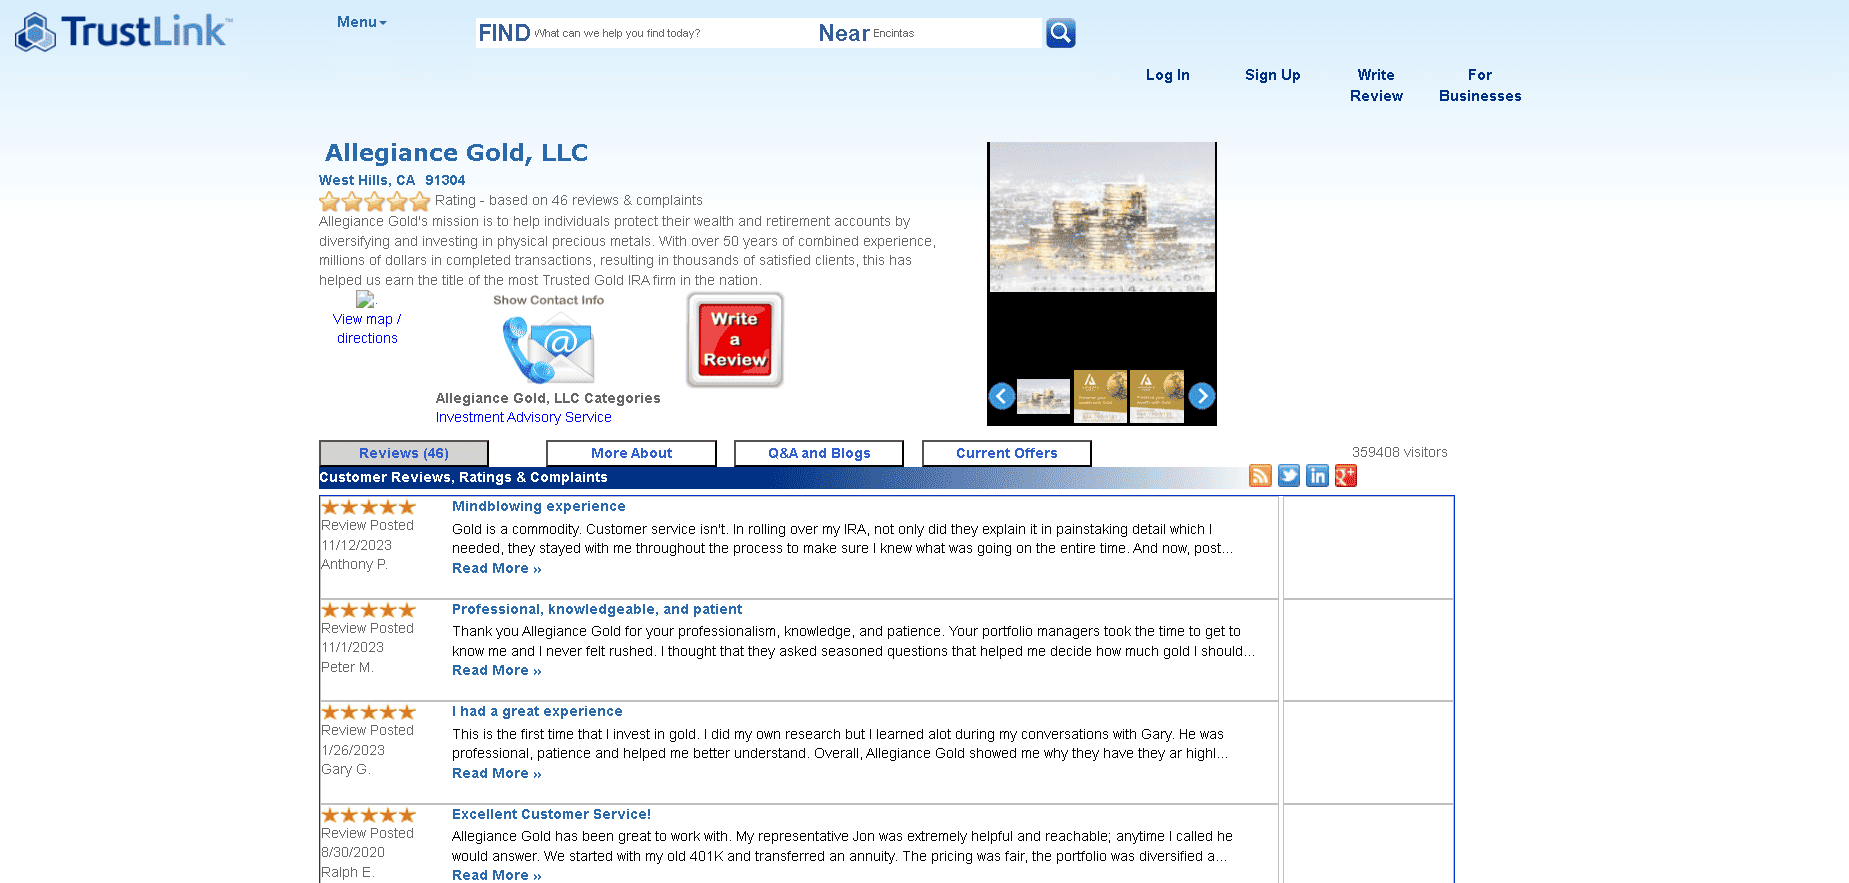 Allegiance Gold Trustlink profile and customer reviews